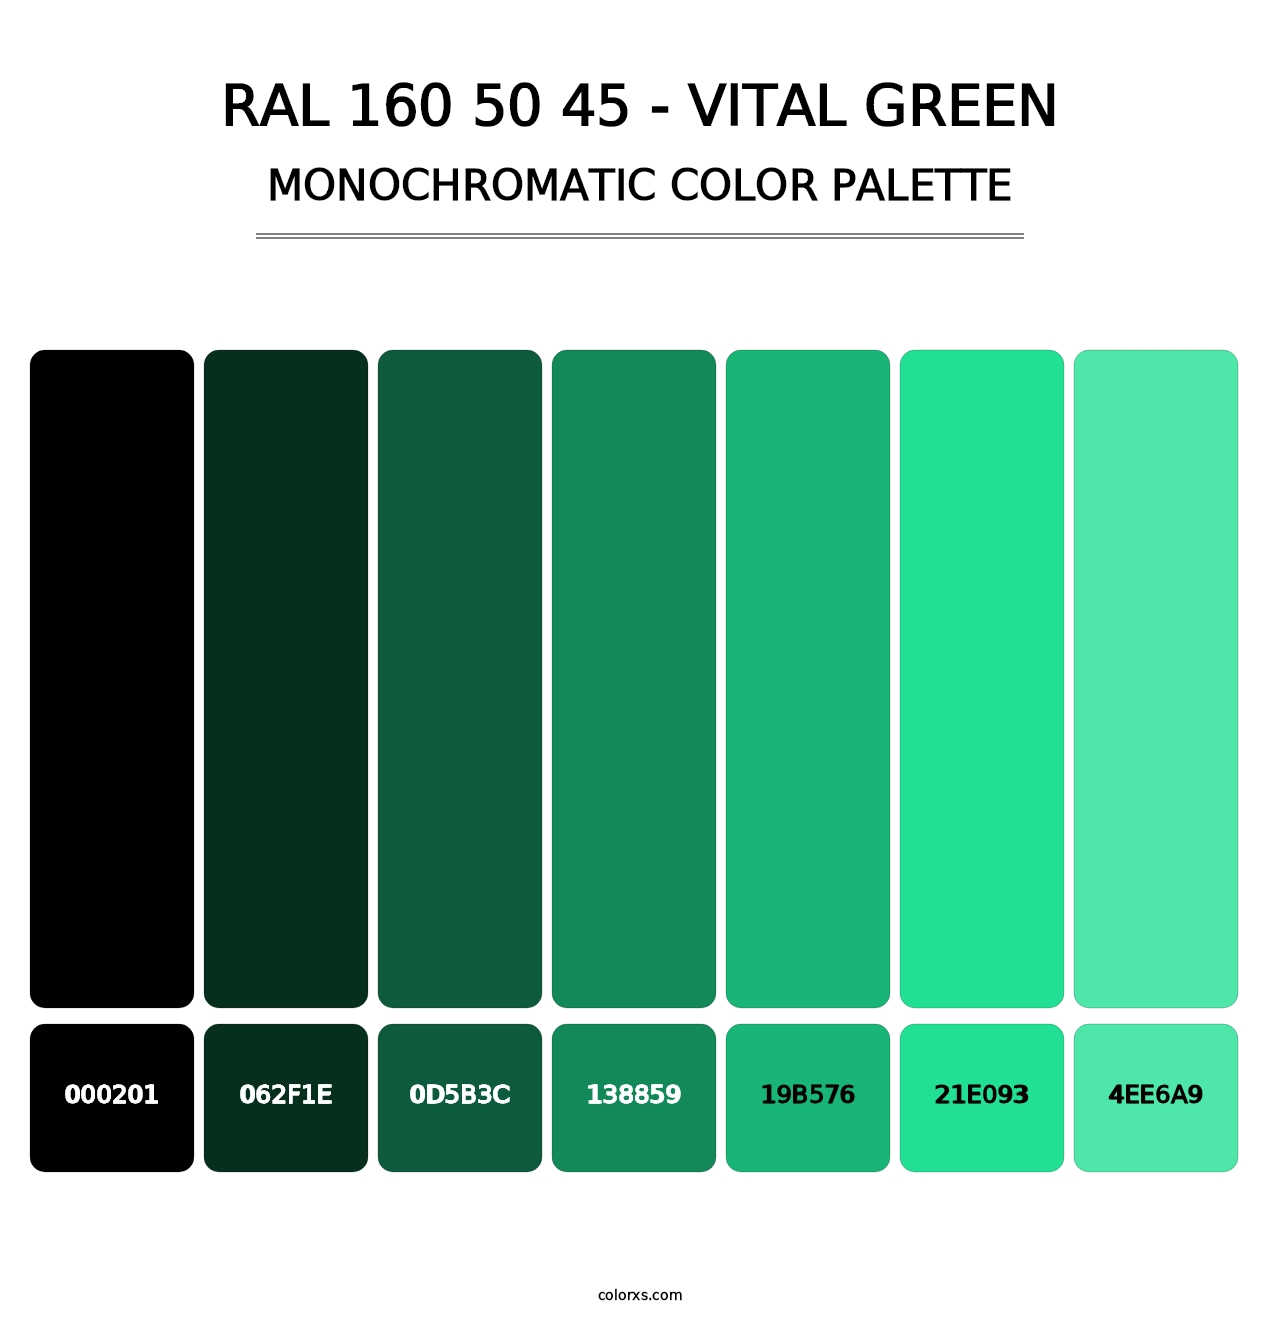 RAL 160 50 45 - Vital Green - Monochromatic Color Palette